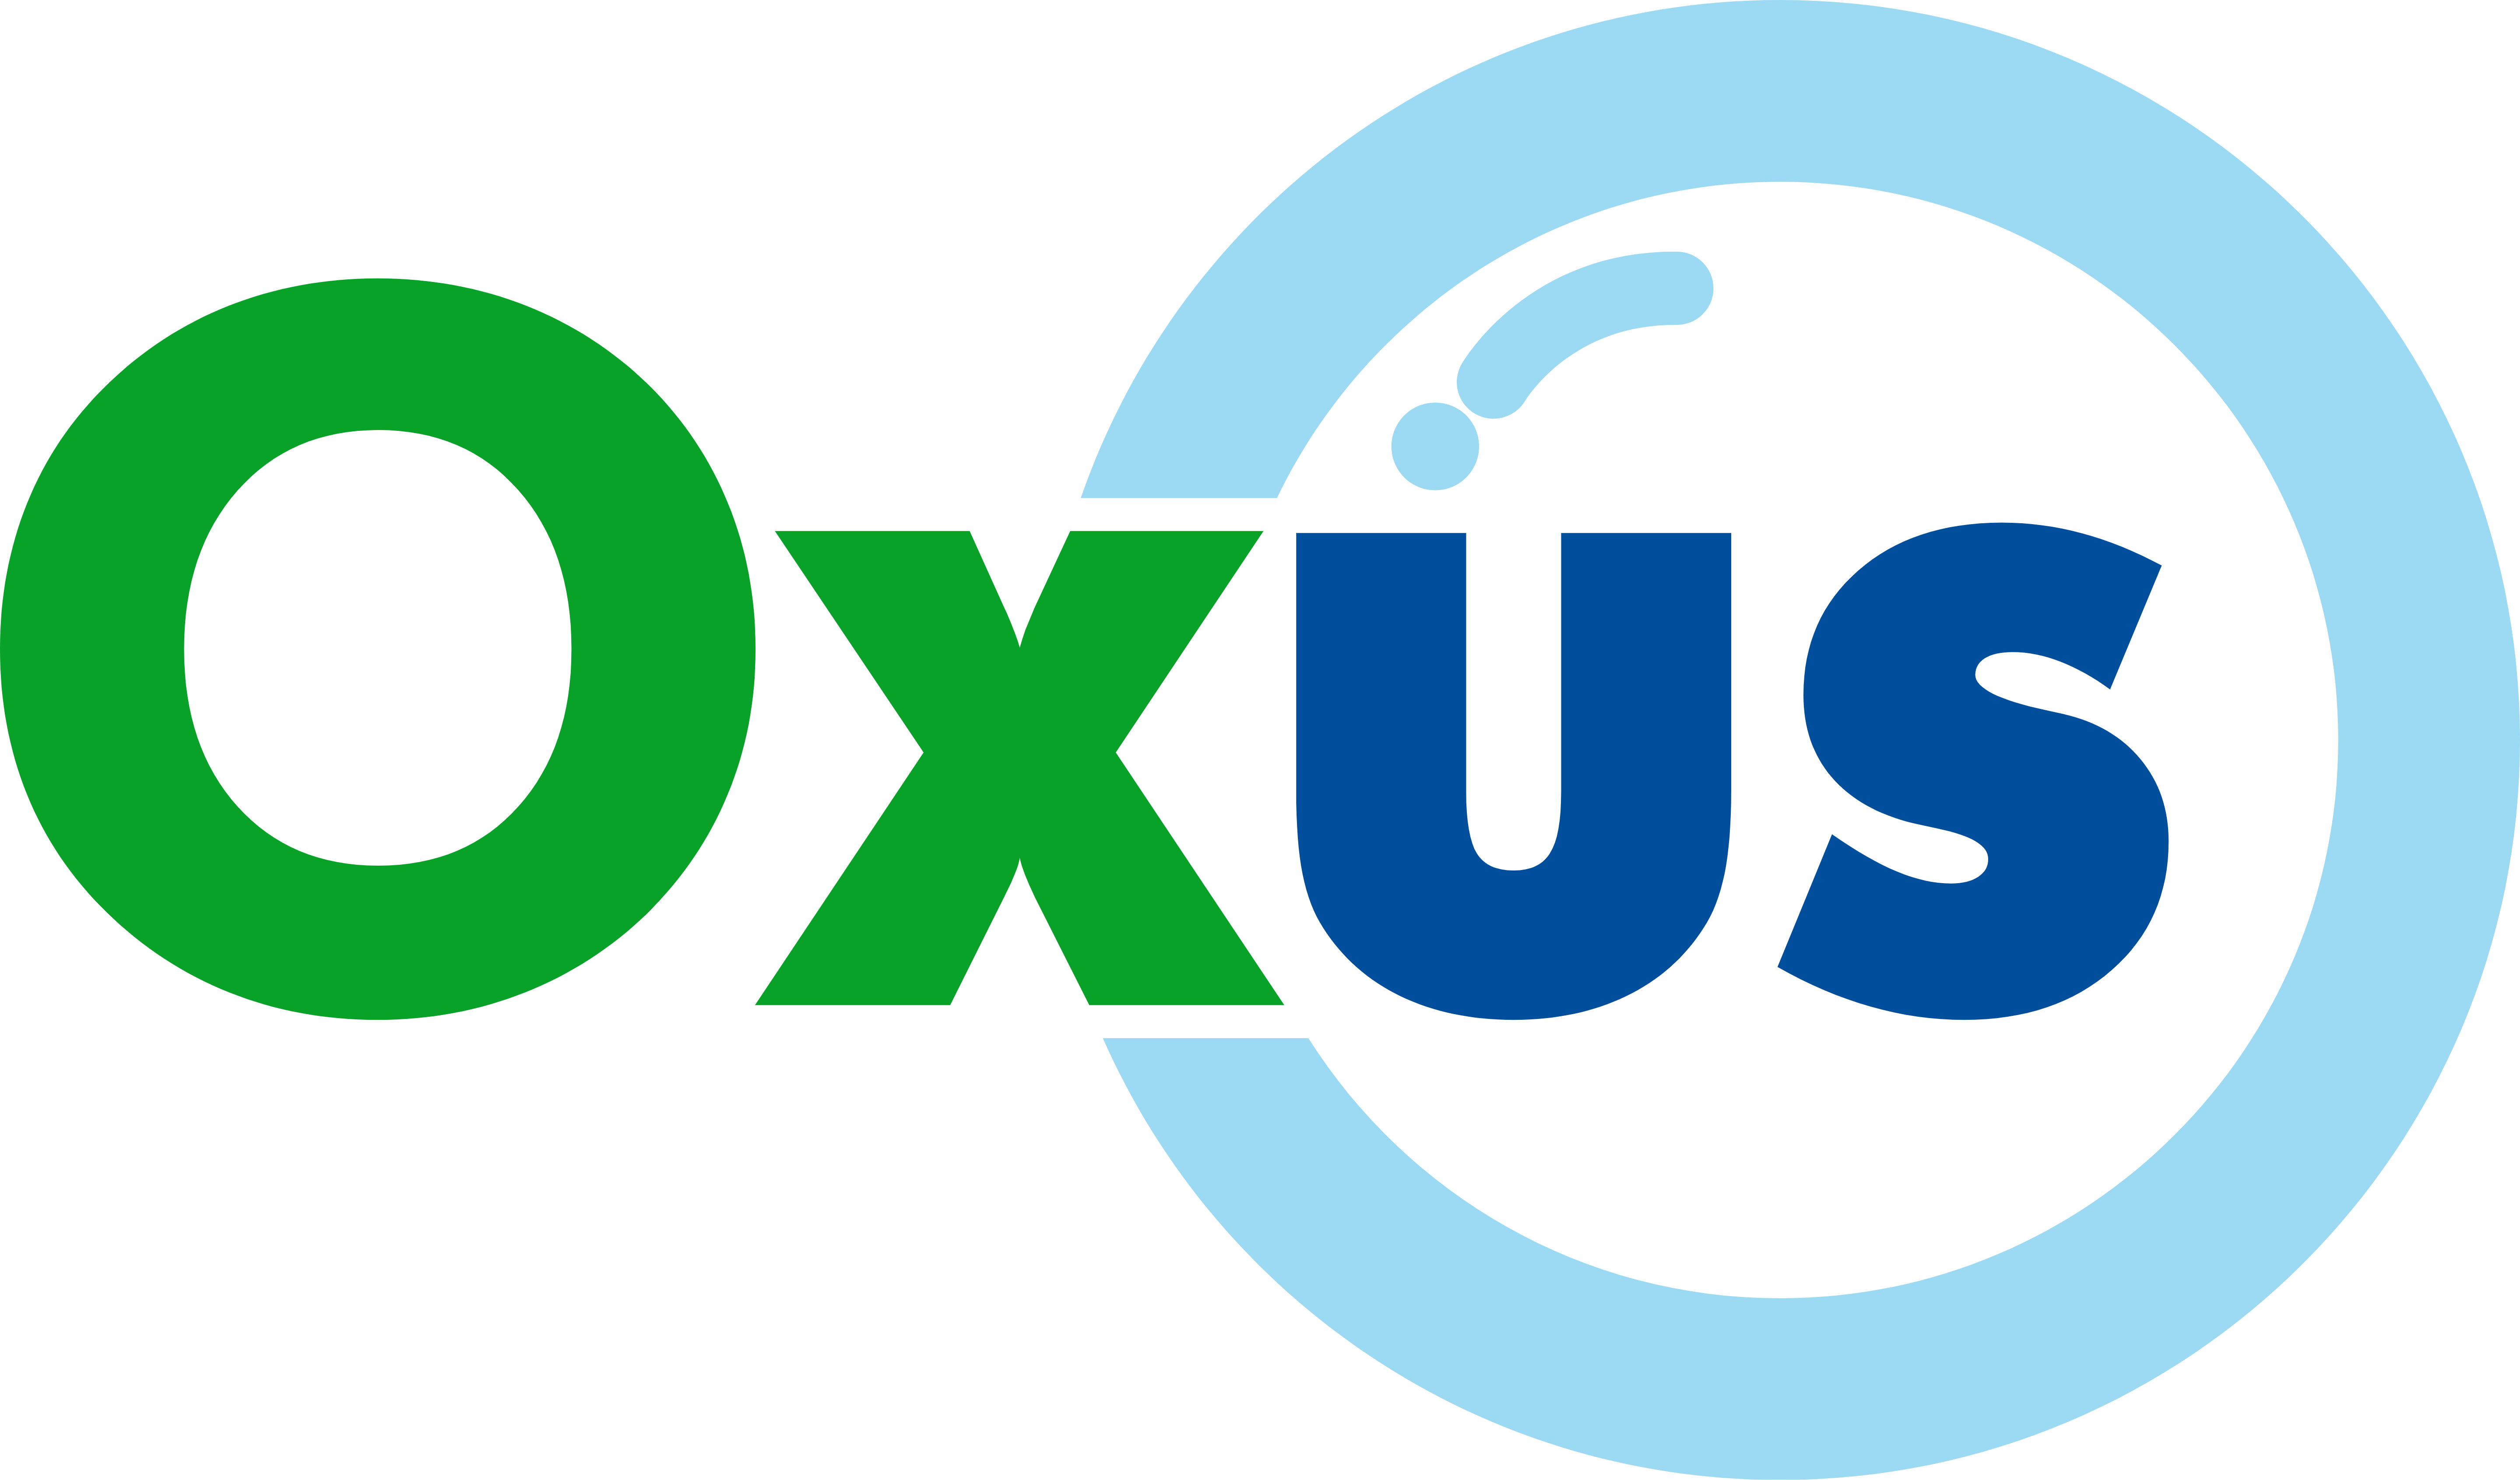 Oxus co.,Ltd